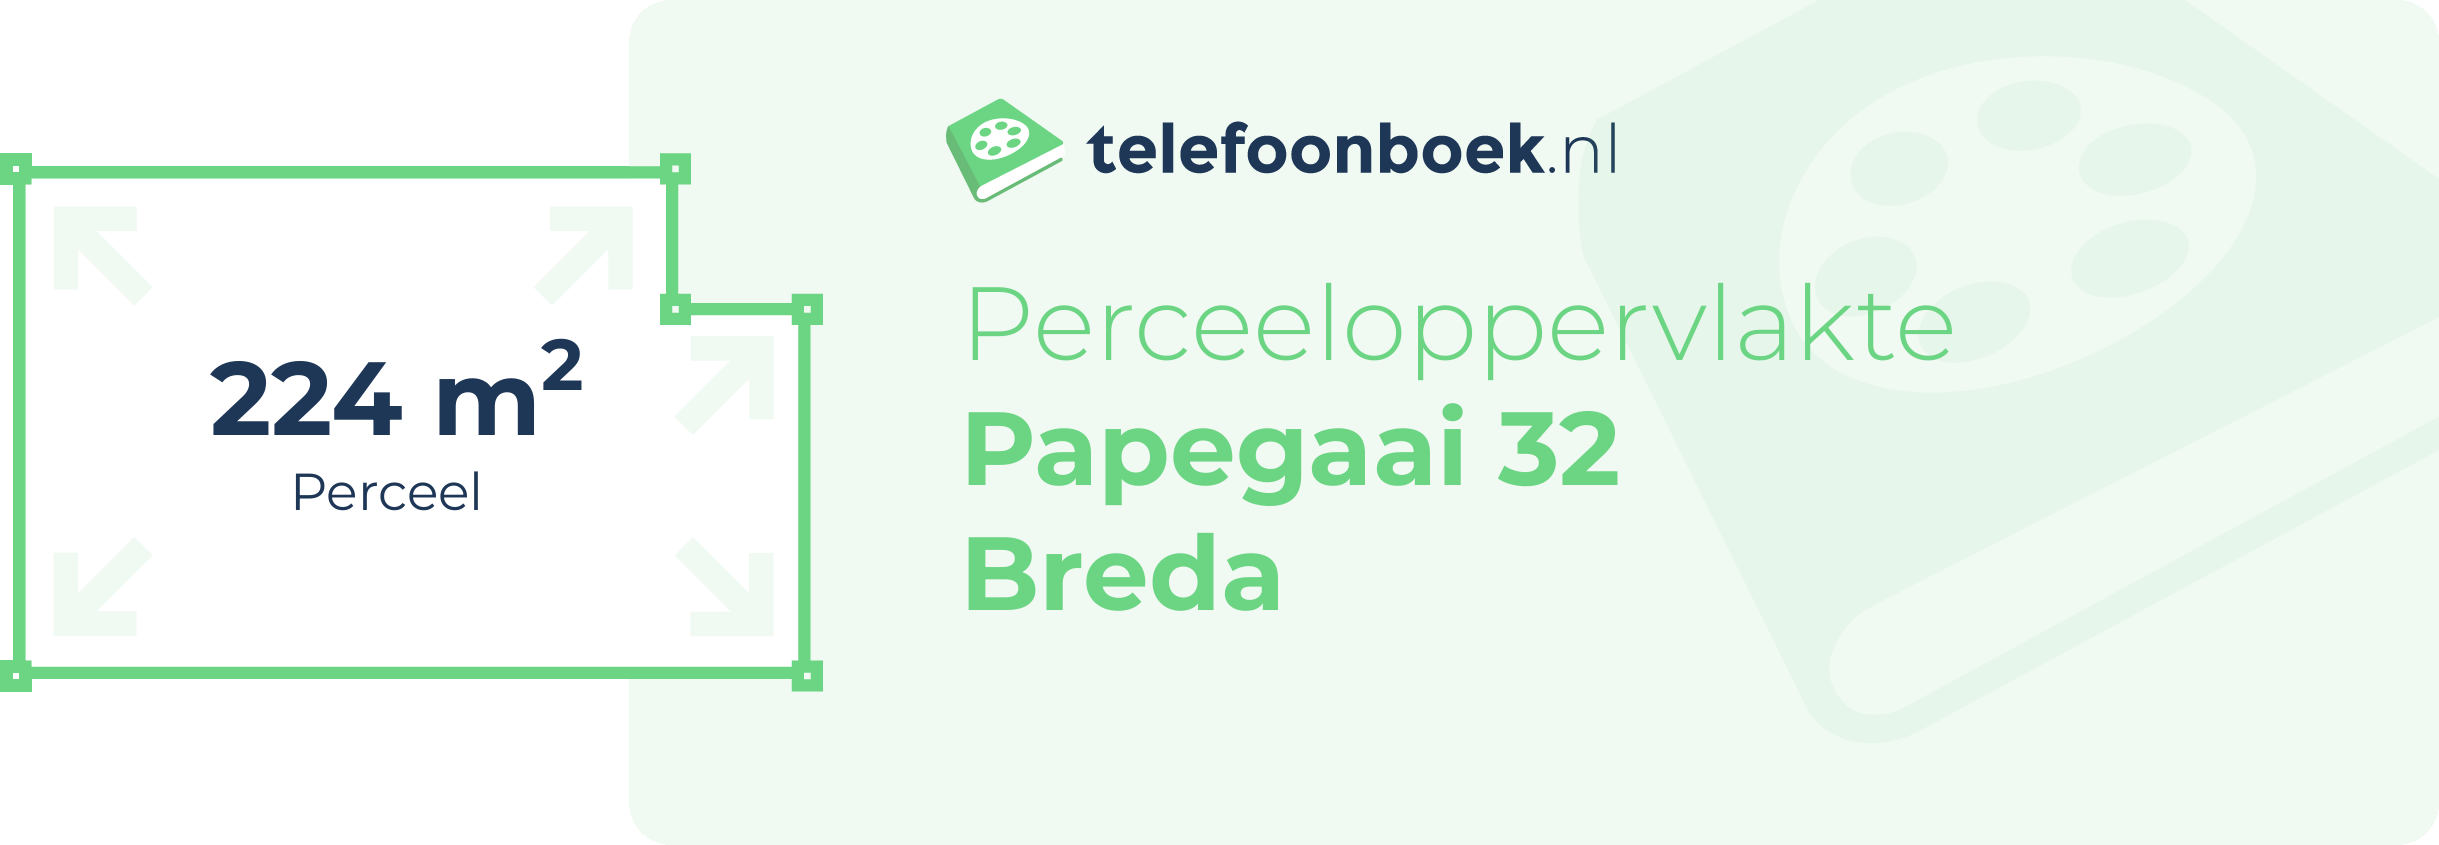 Perceeloppervlakte Papegaai 32 Breda